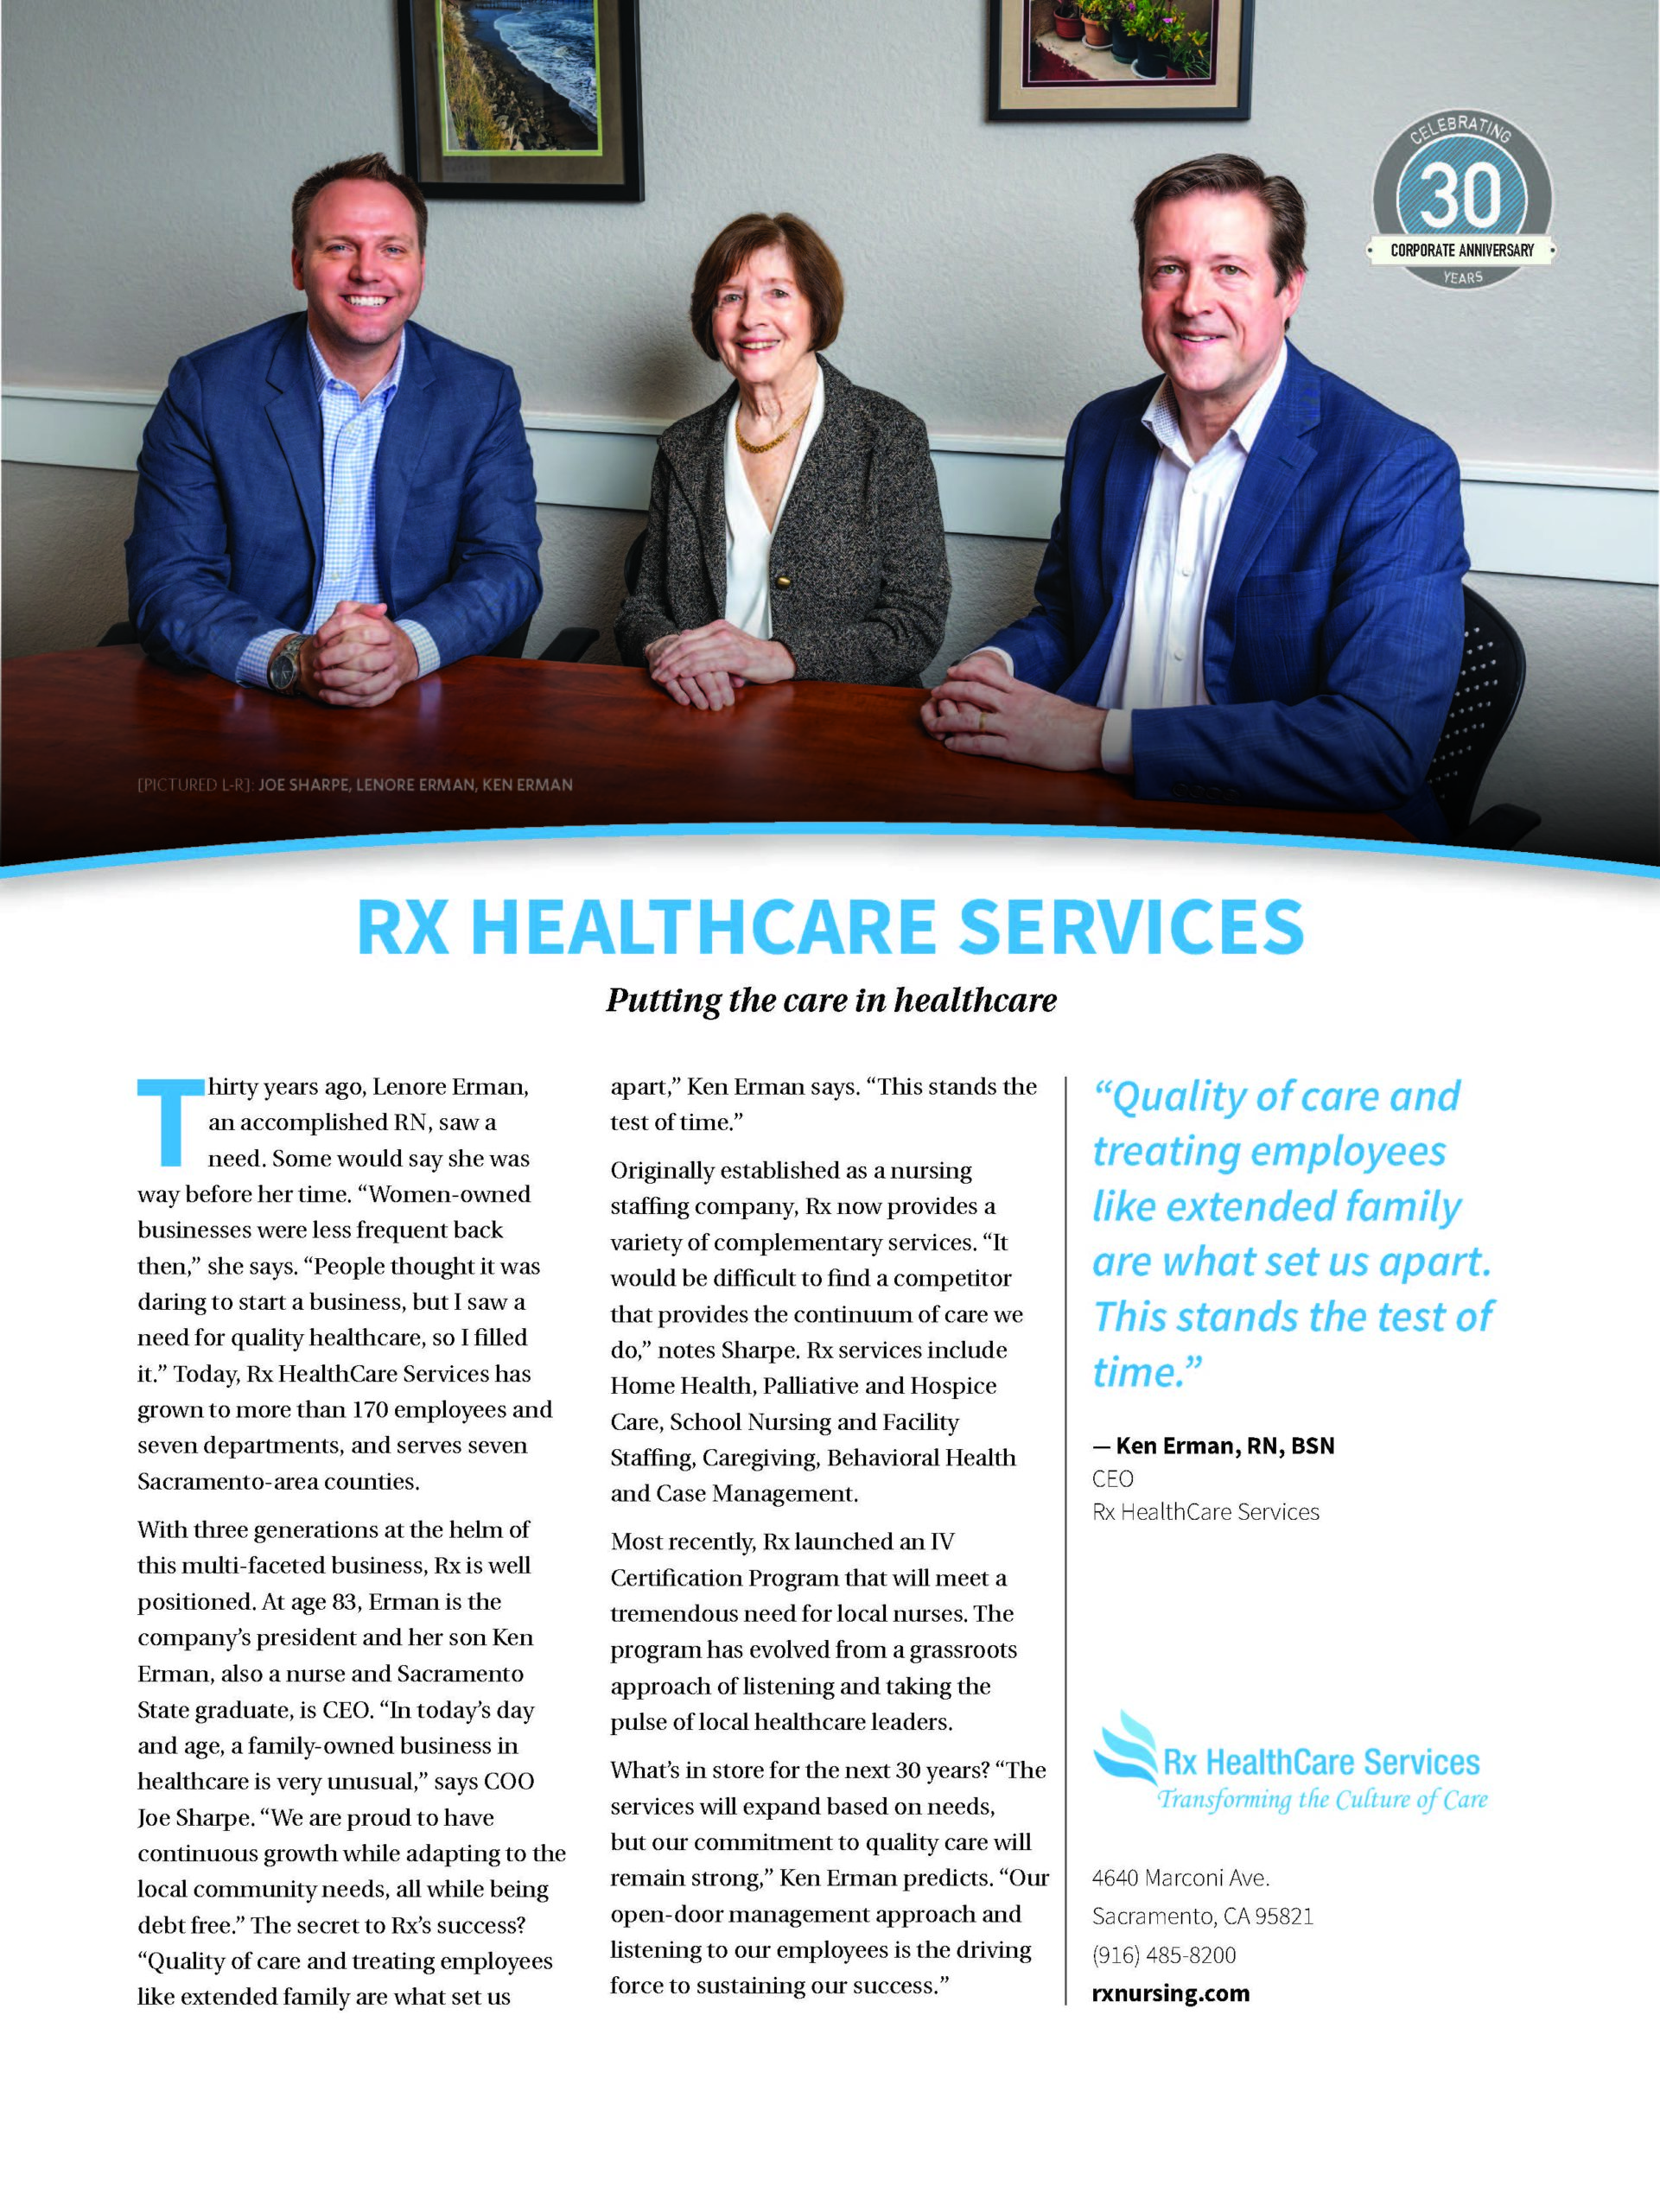 Rx-HealthCare Services